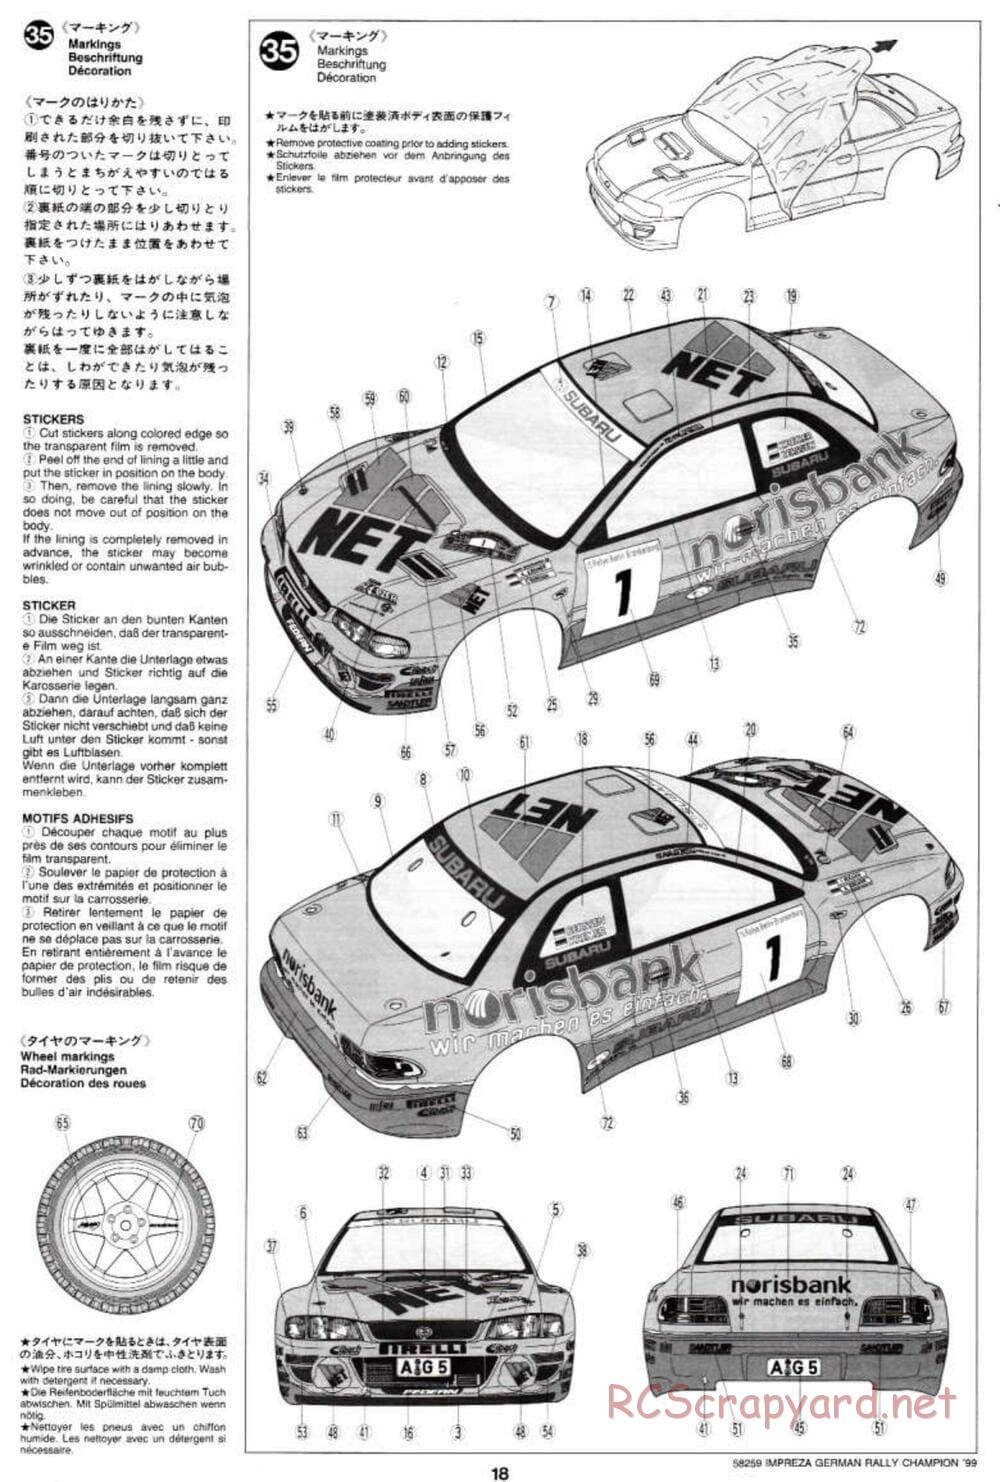 Tamiya - Subaru Impreza German Rally Champion 99 - TB-01 Chassis - Manual - Page 18